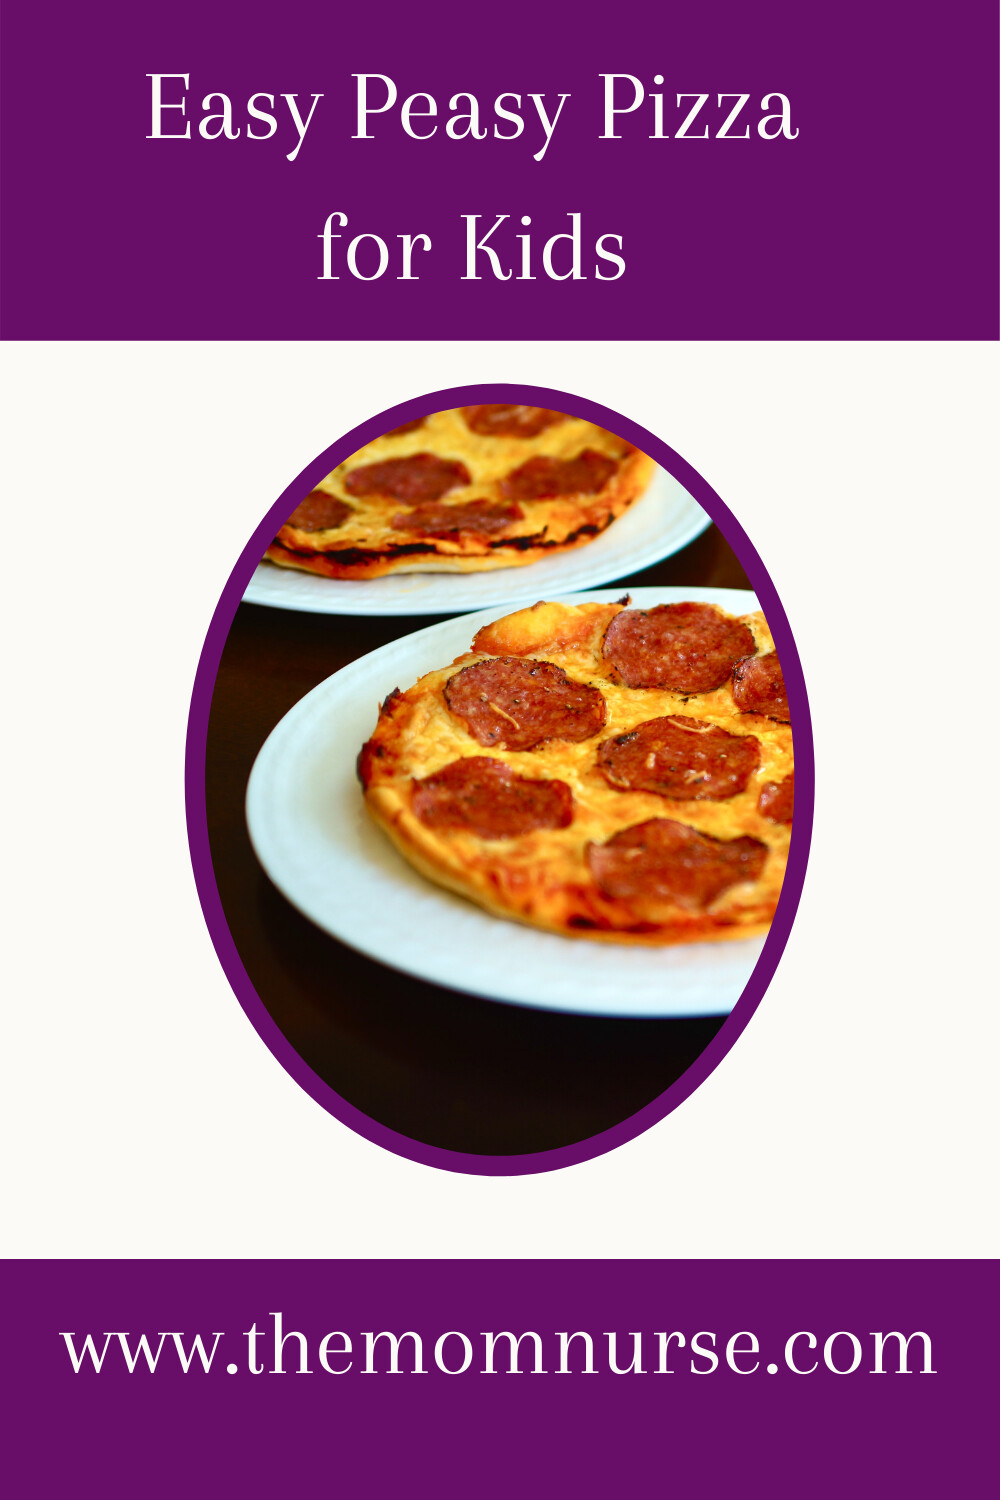 Easy Pizza for Kids!